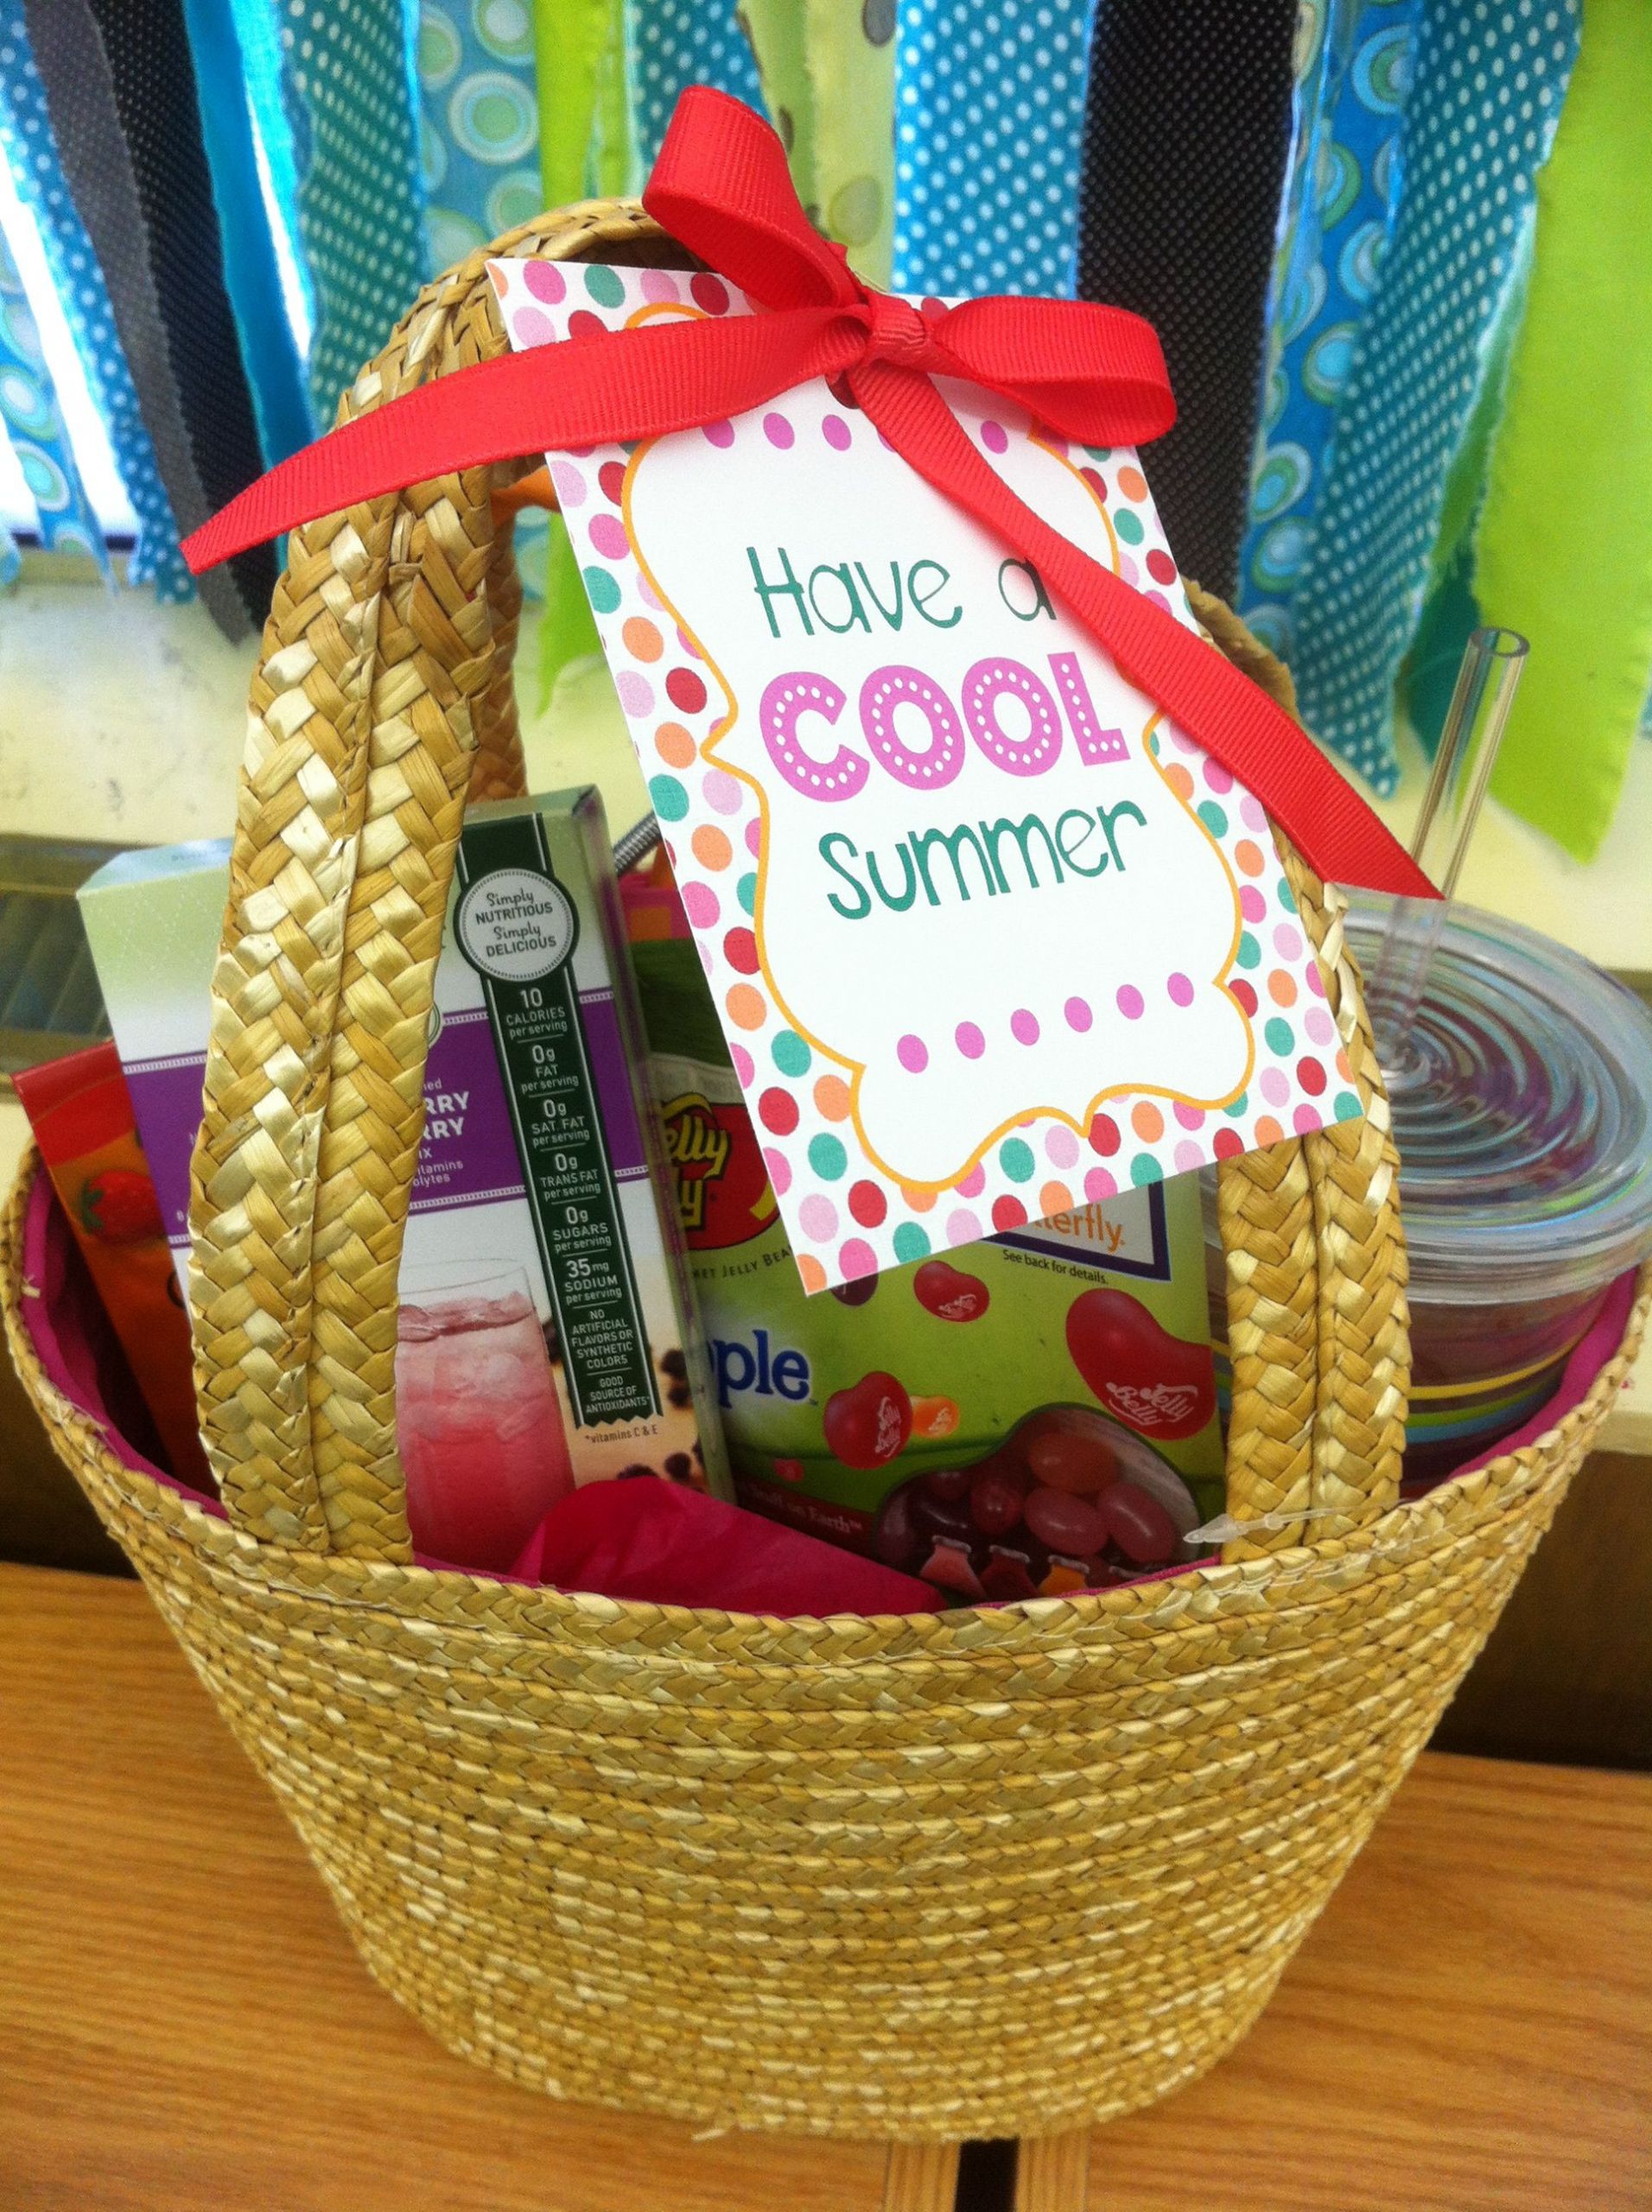 Summer Gift Idea
 Have a "Cool" summer t basket idea reusable tumbler